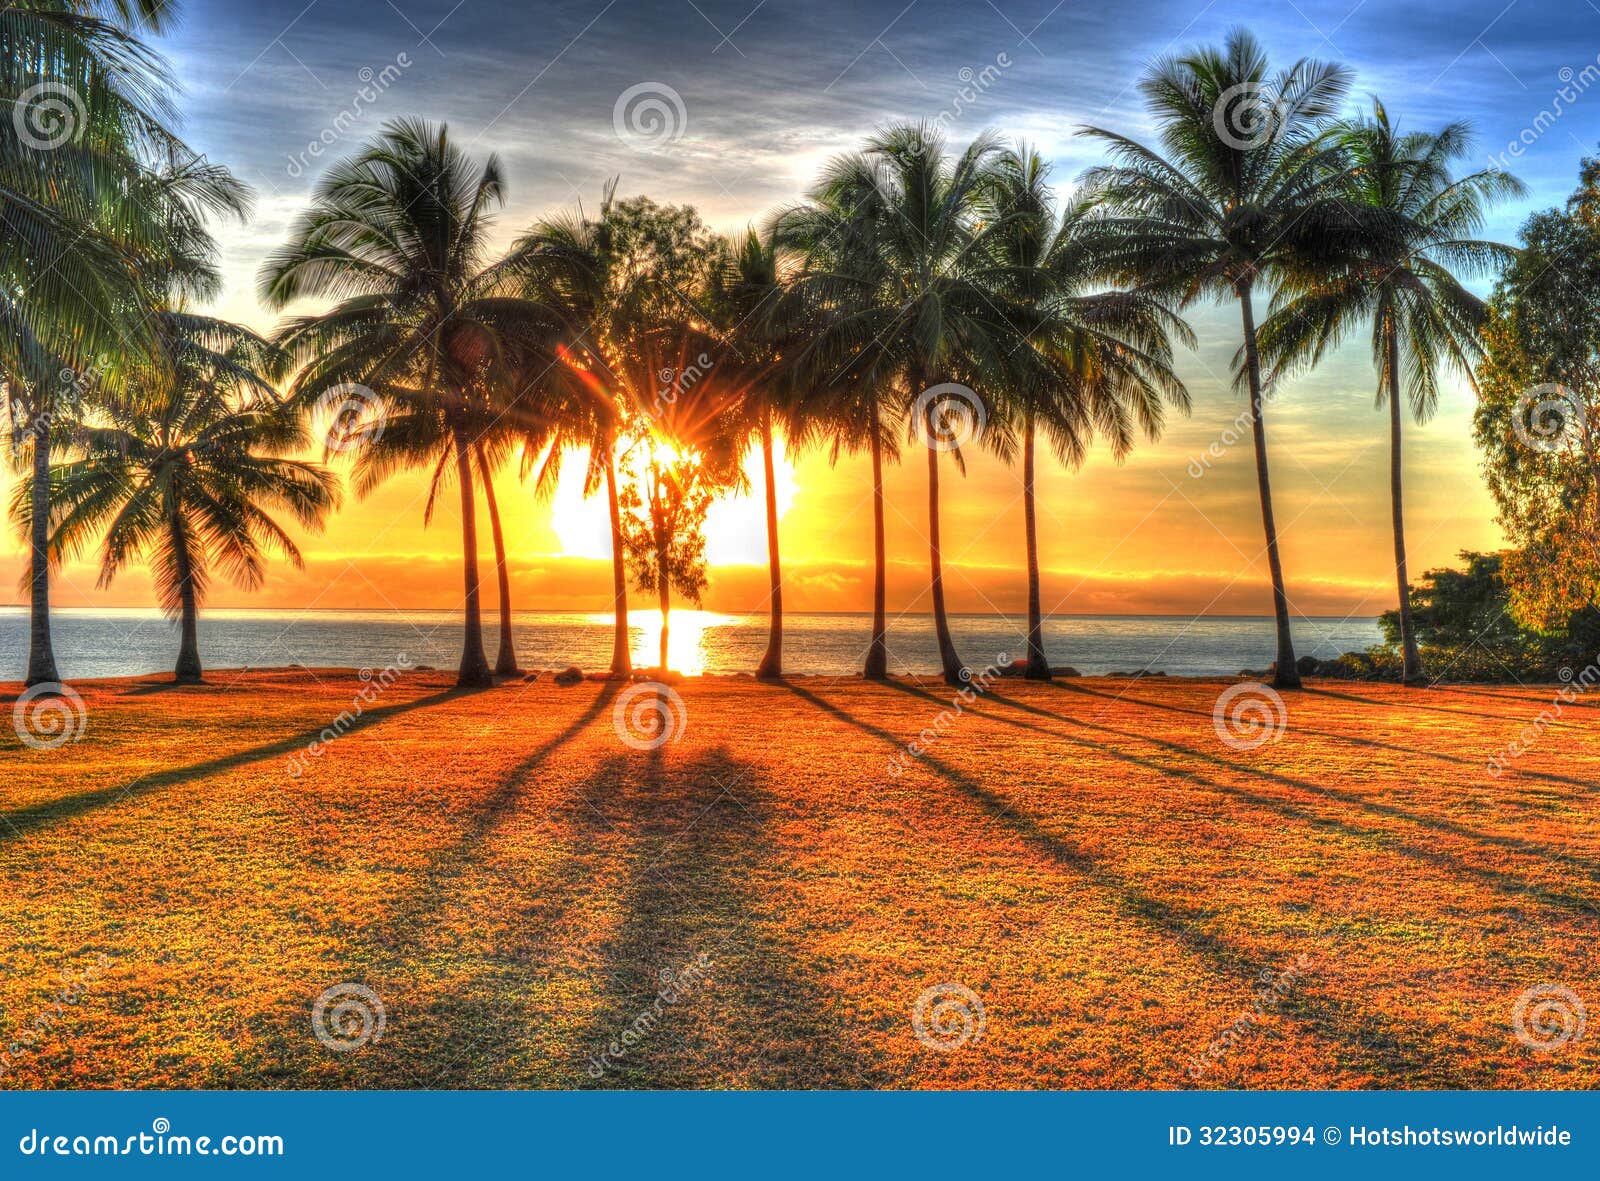 sunlight rising behind palm trees in hdr, port douglas, australia